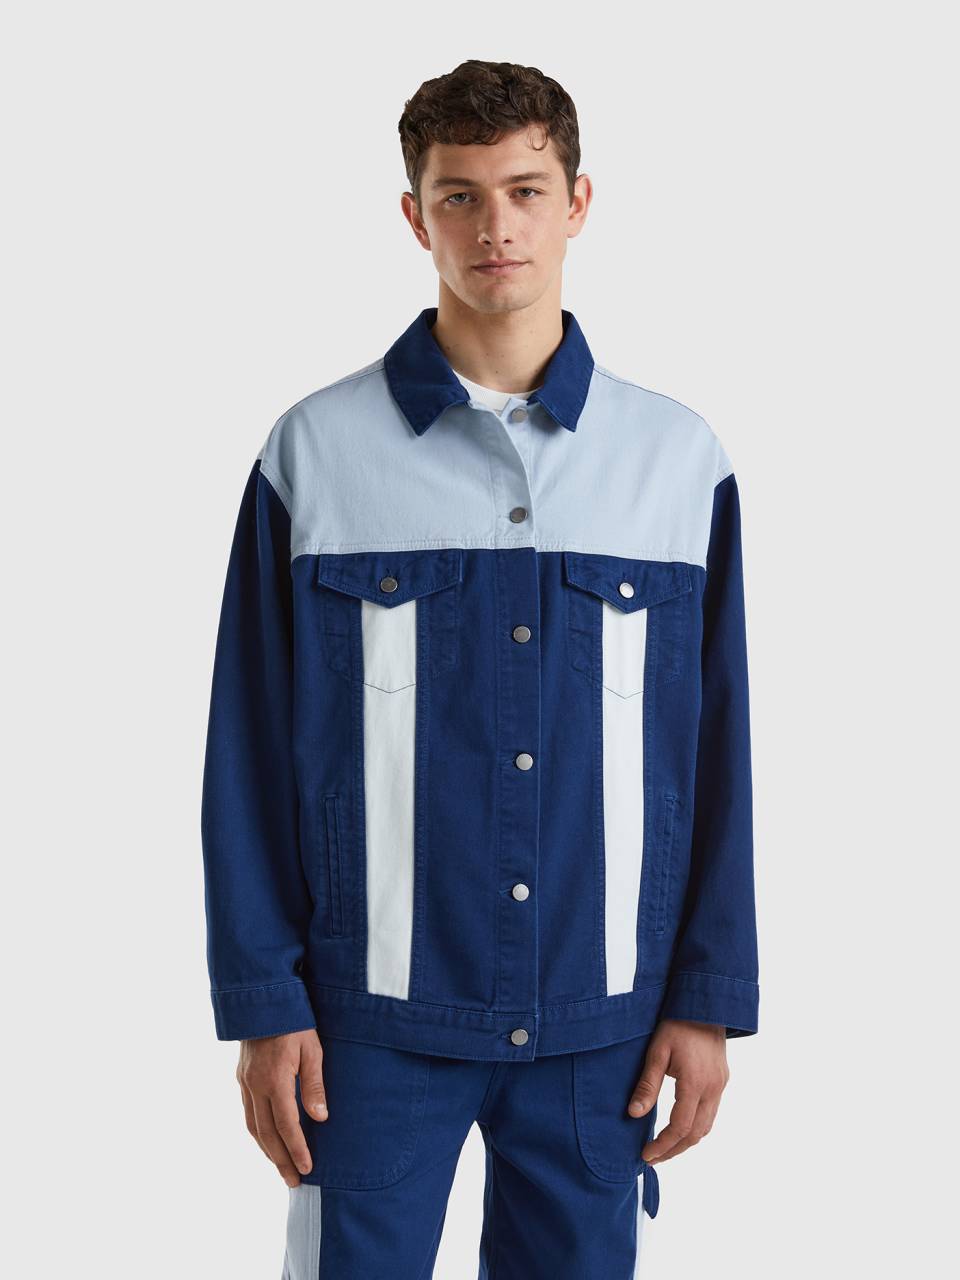 Urban Outfitters | Jackets & Coats | Color Blocked Denim Jacket | Poshmark